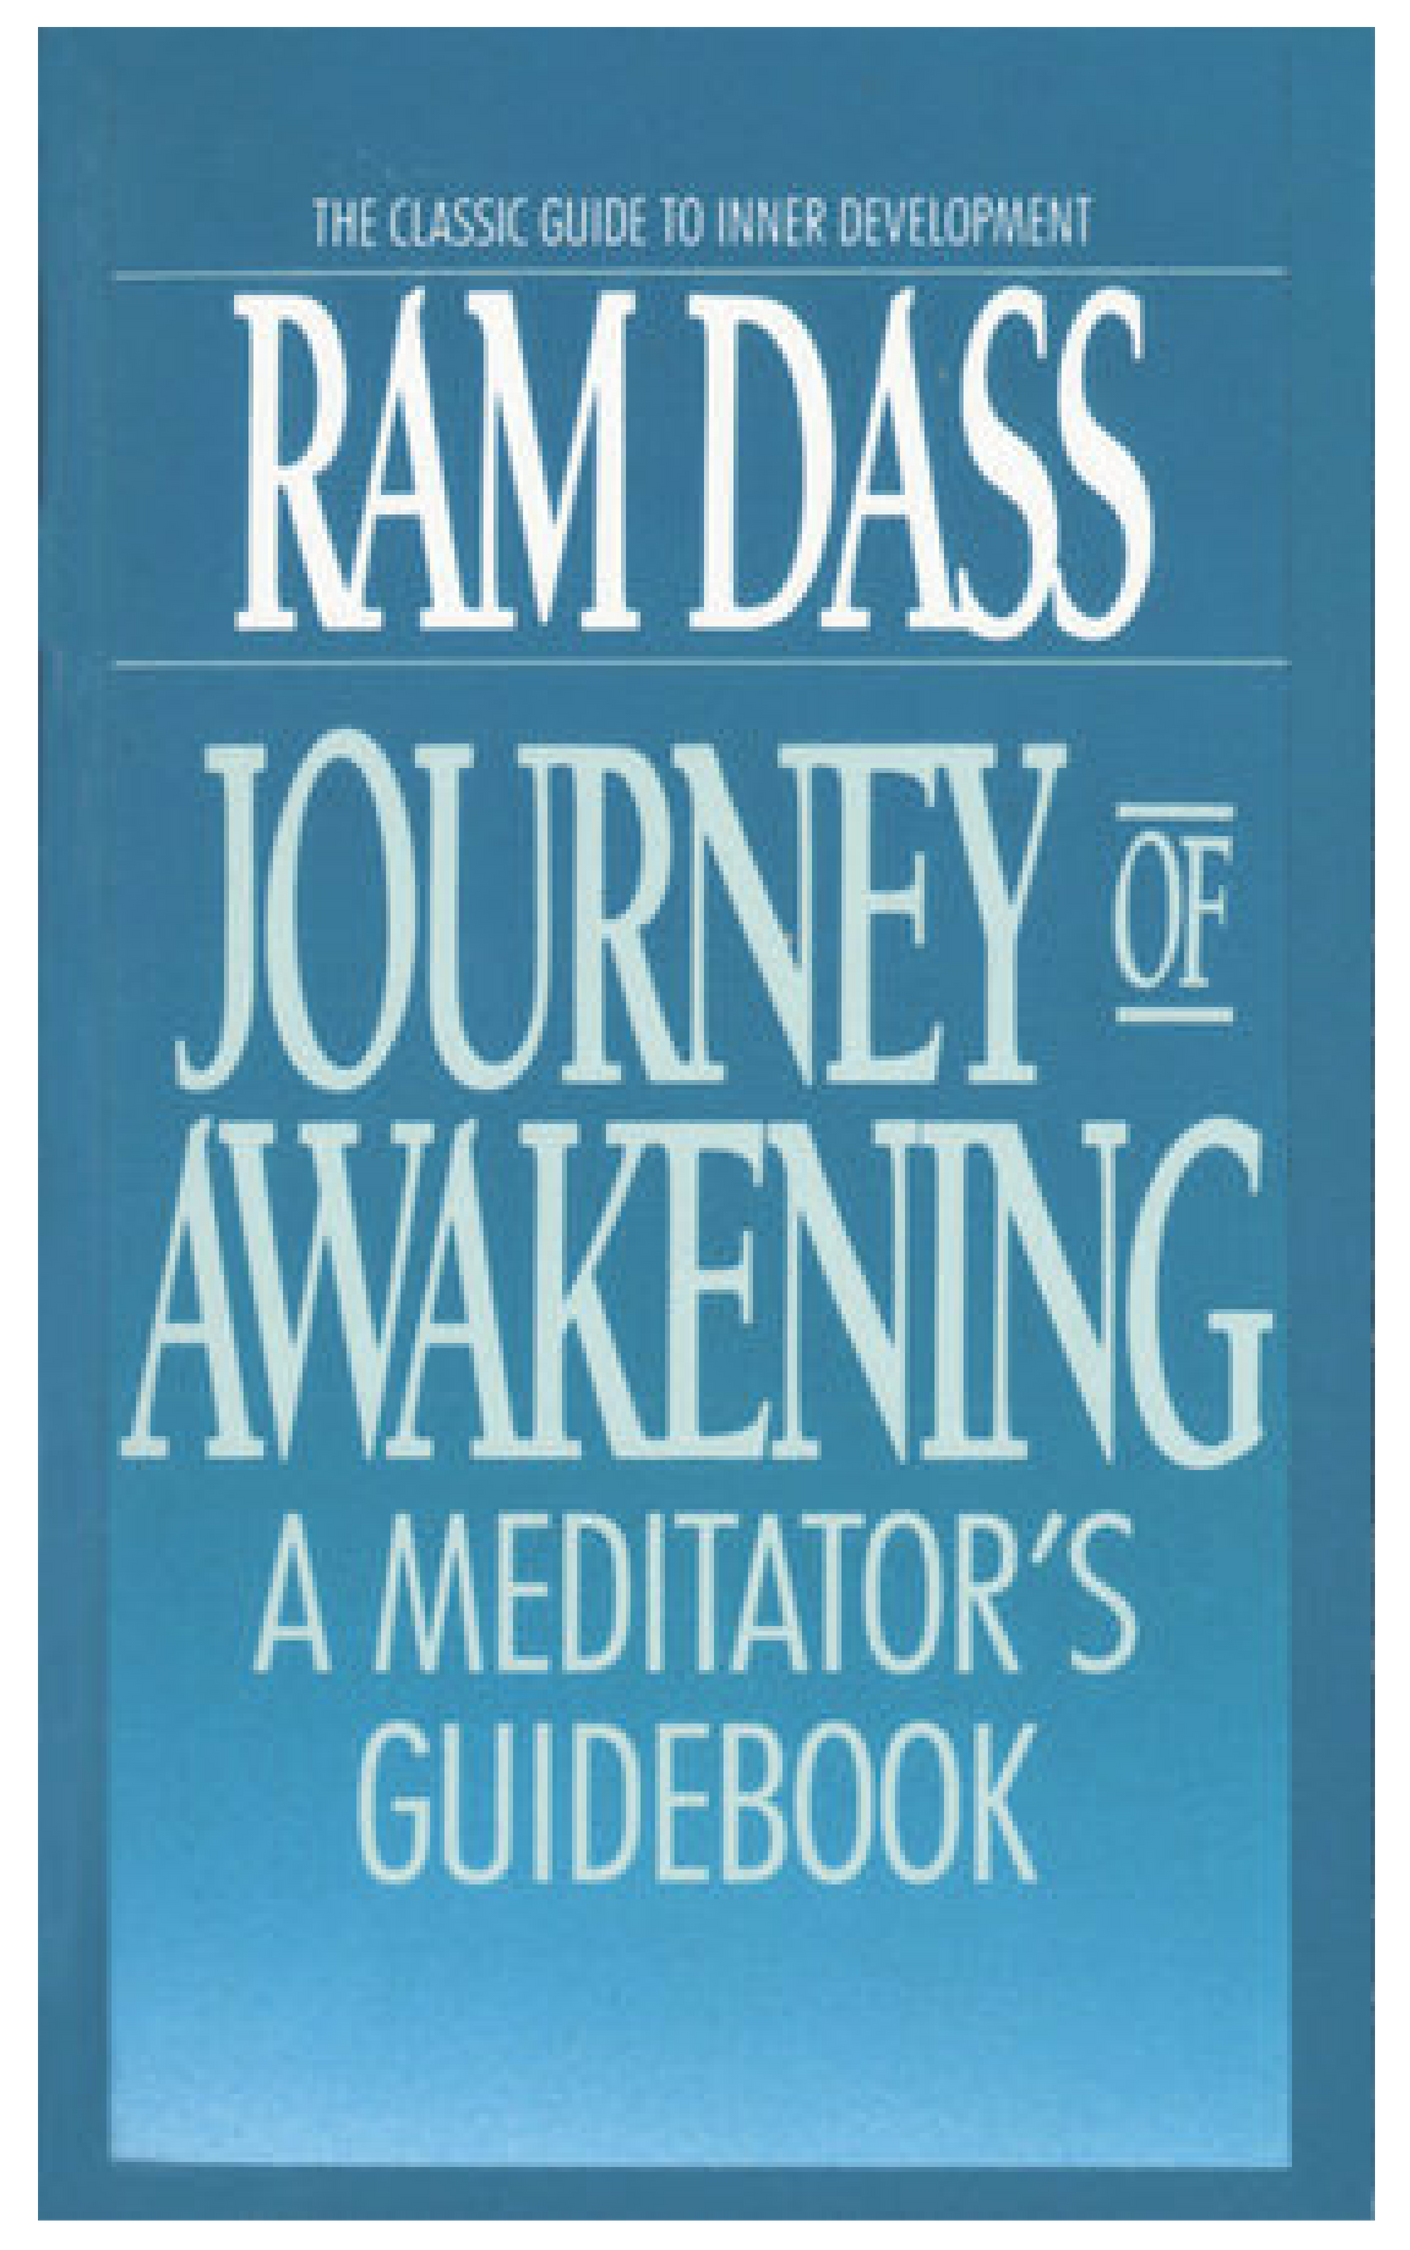 Journey of Awakening: A Meditators Guidebook